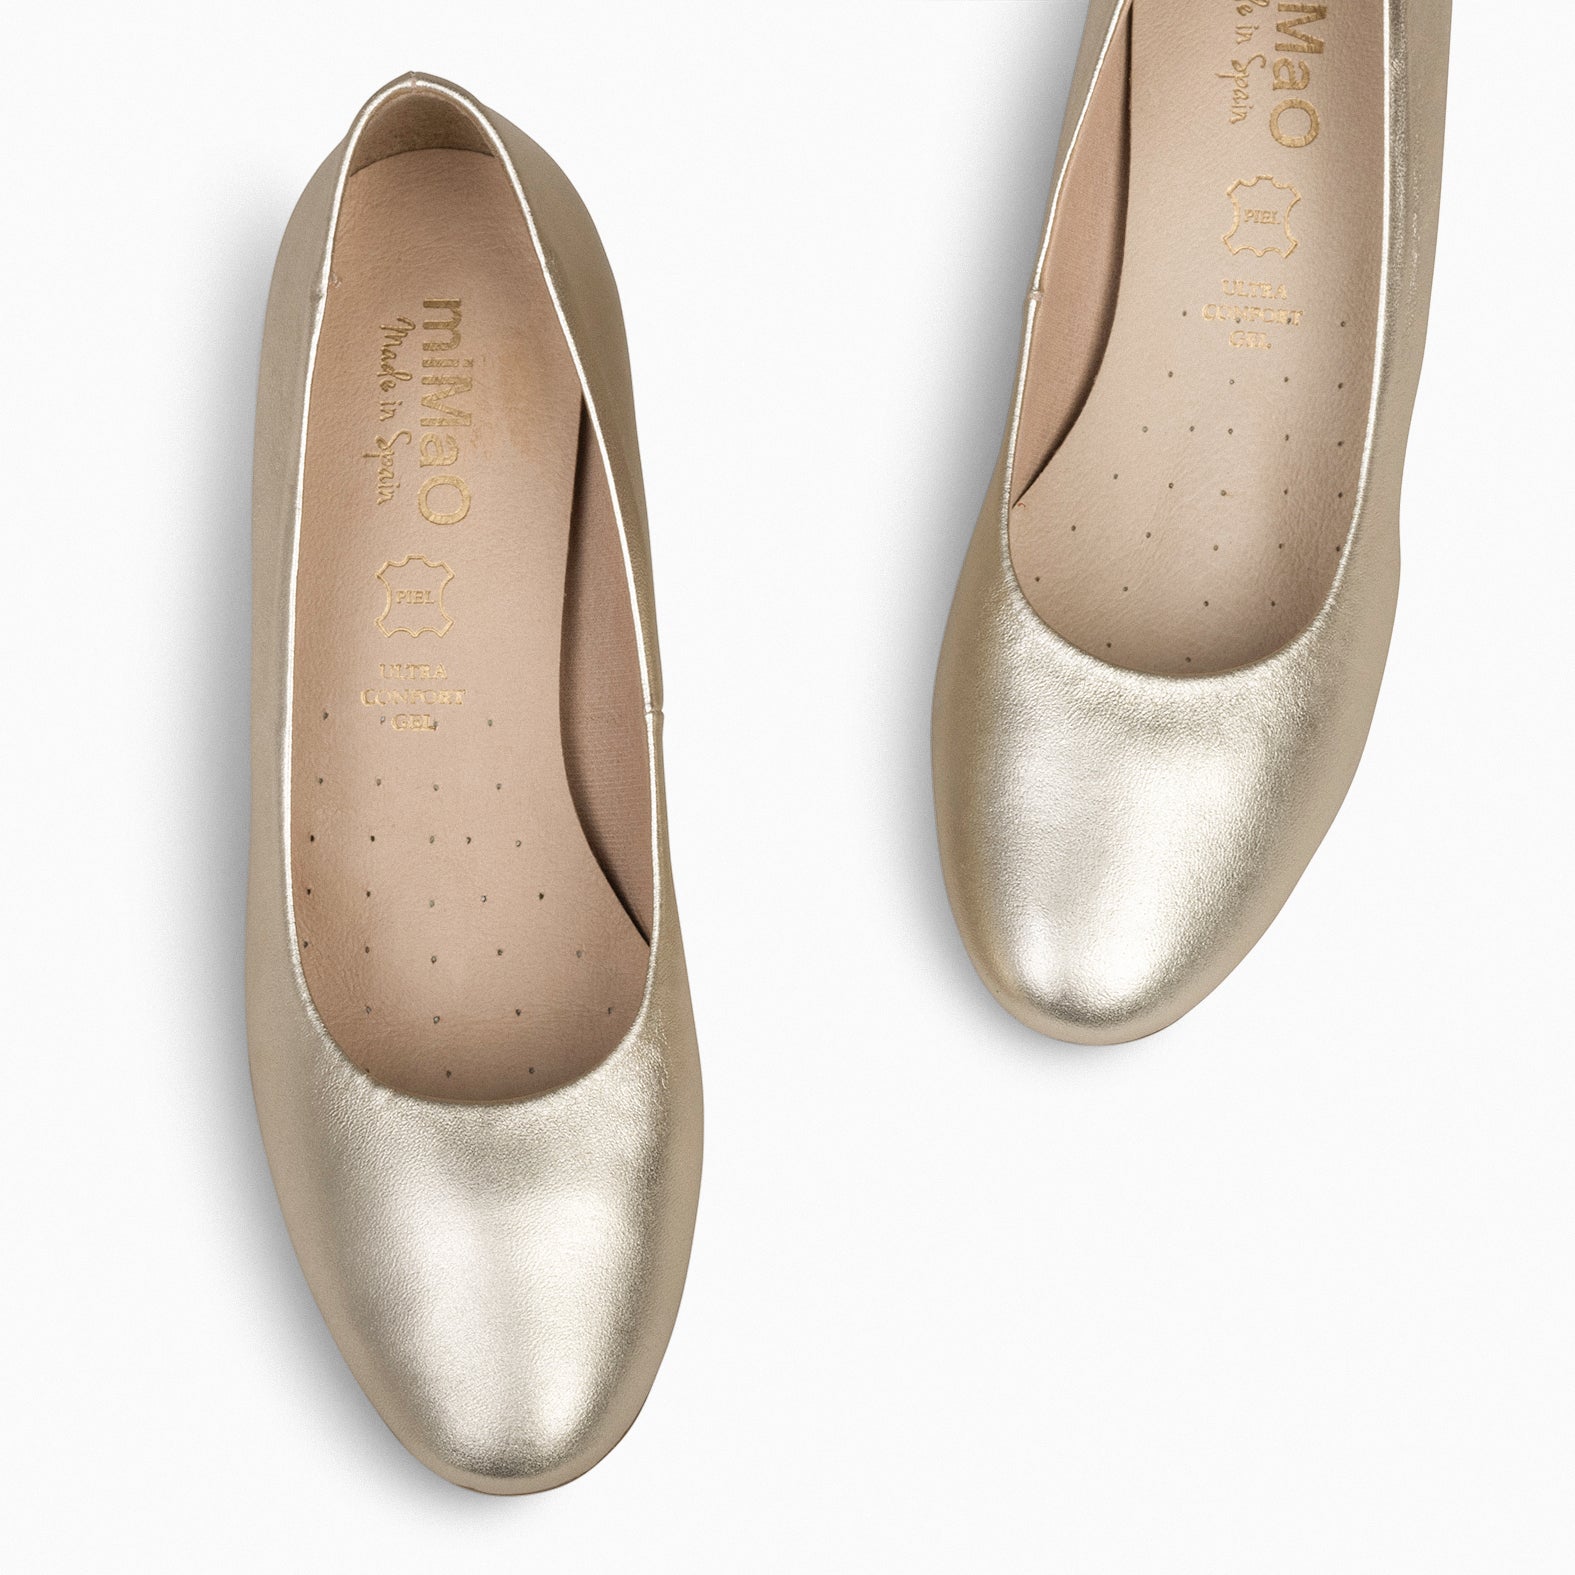 URBAN ROUND SPLASH – GOLDEN metallic nappa leather low heels